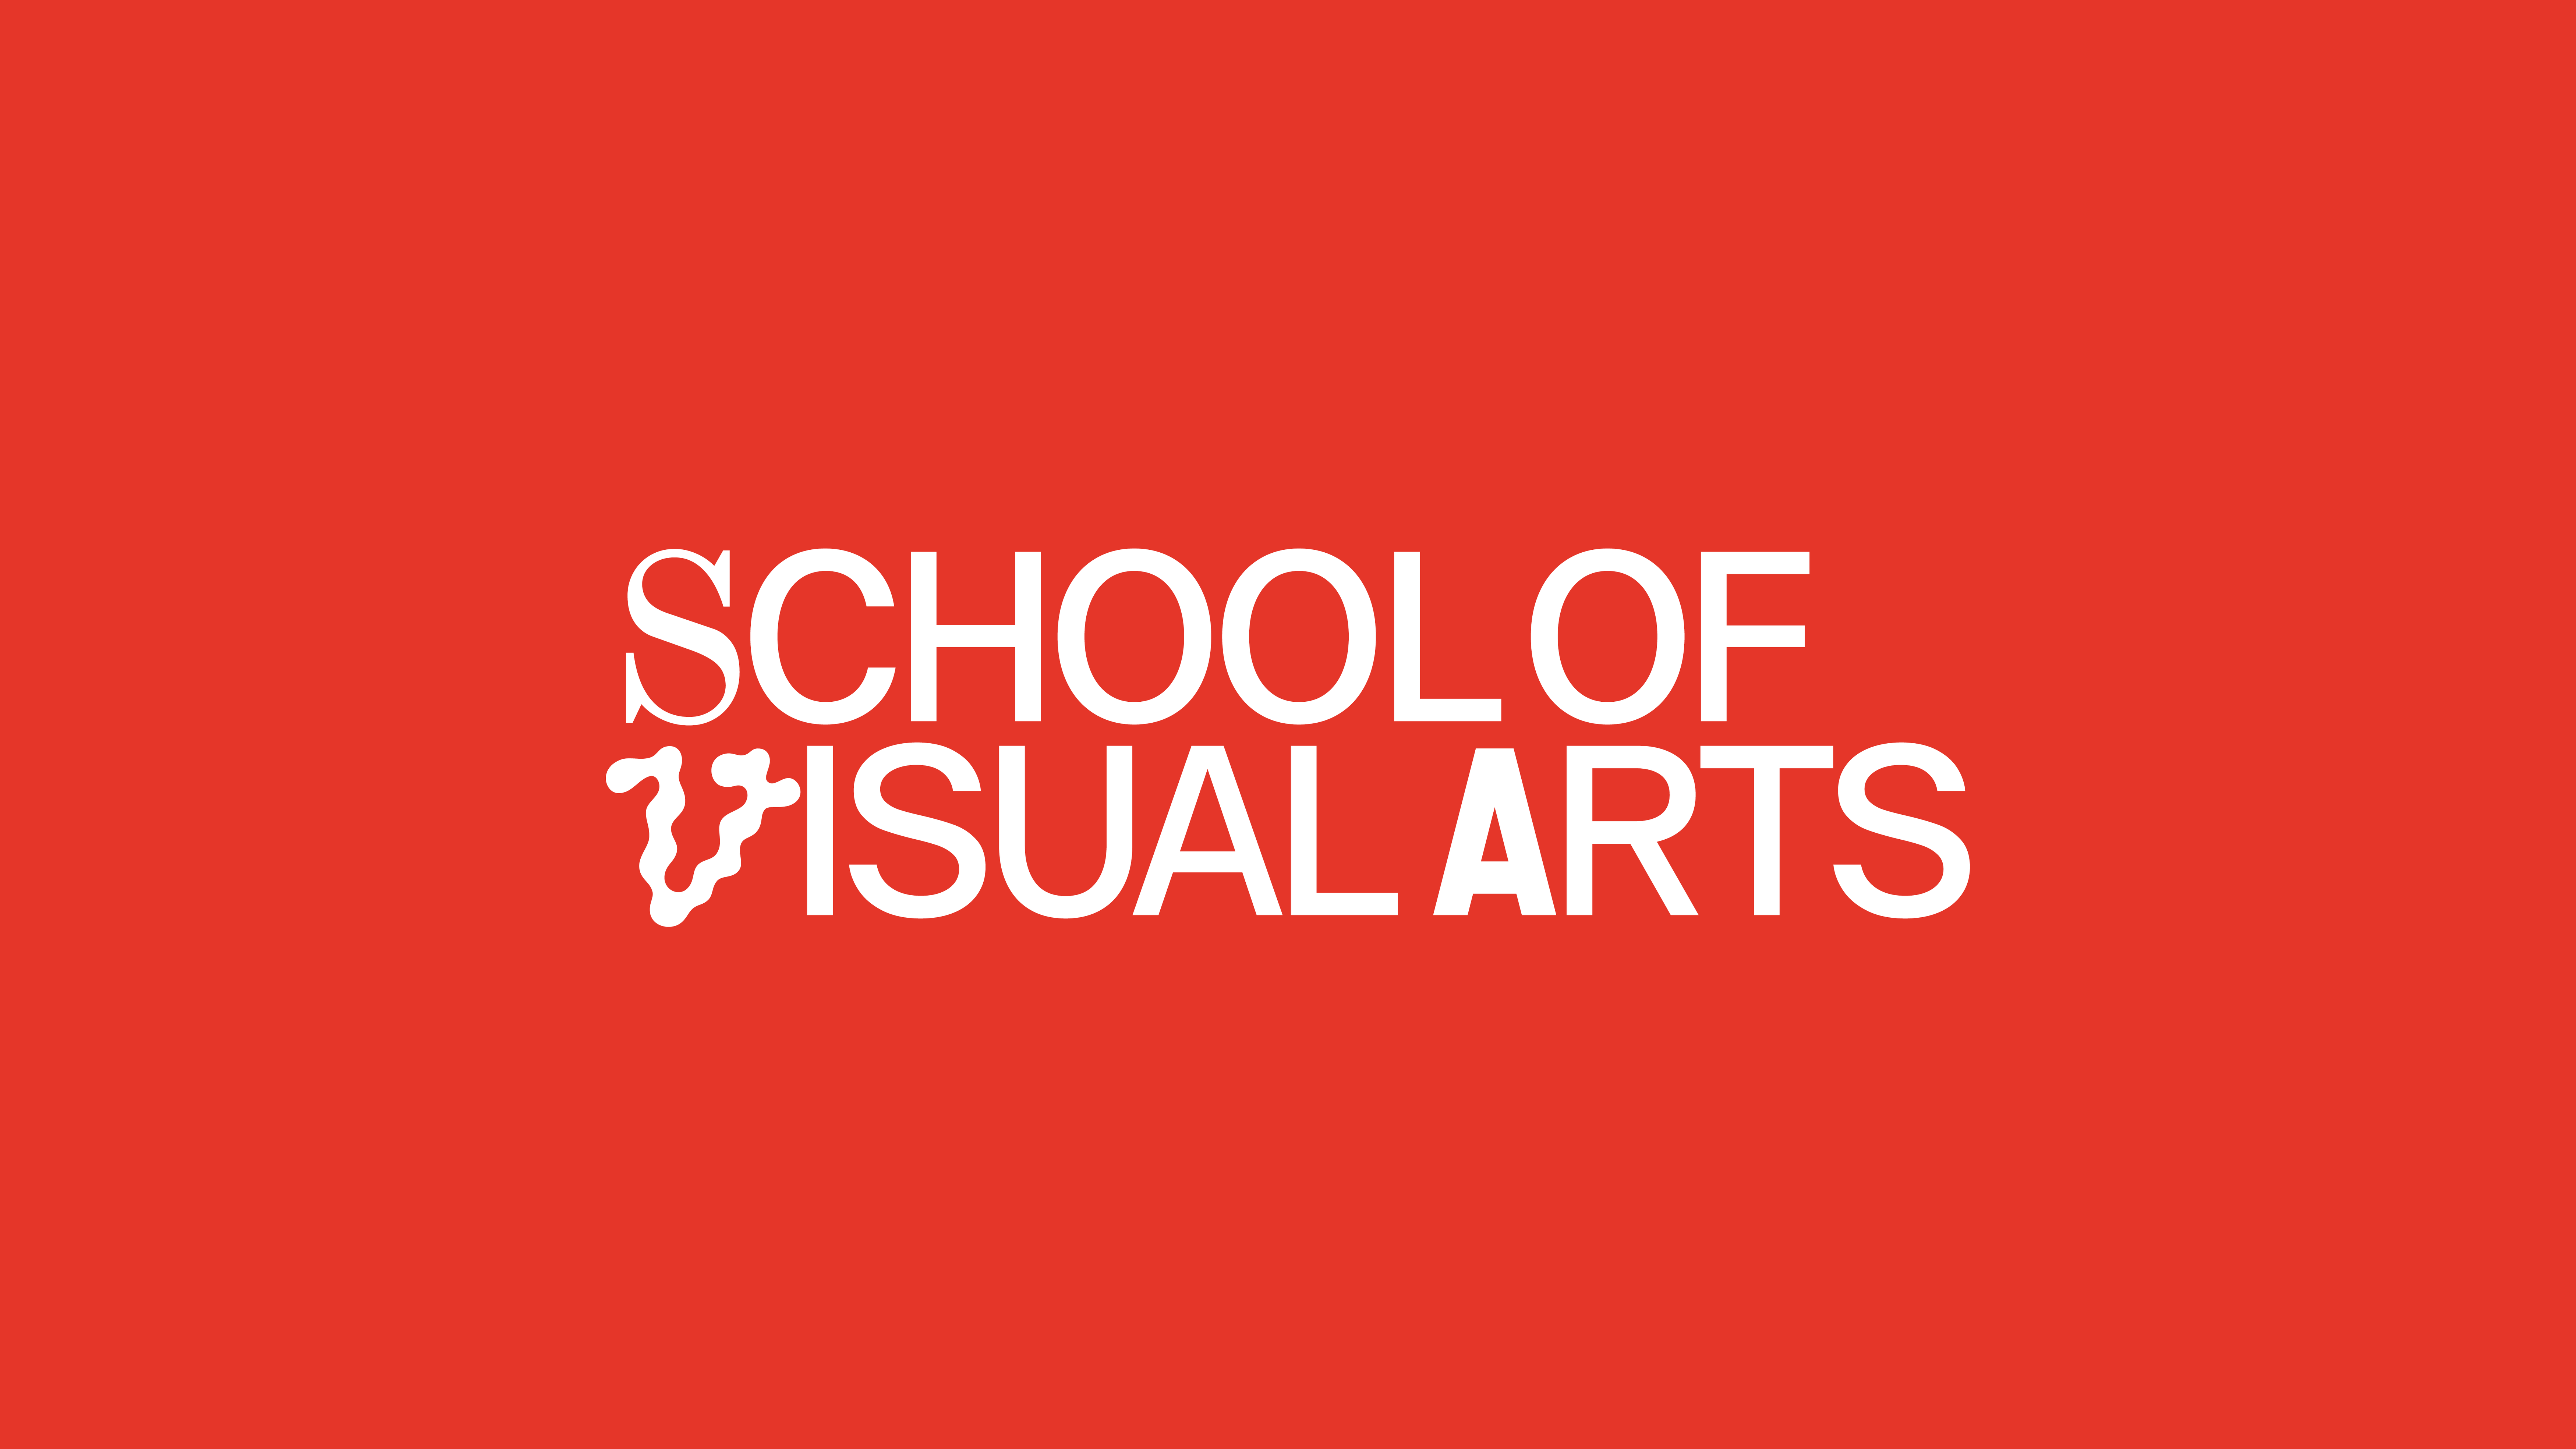 SCHOOL OF VISUAL ARTS